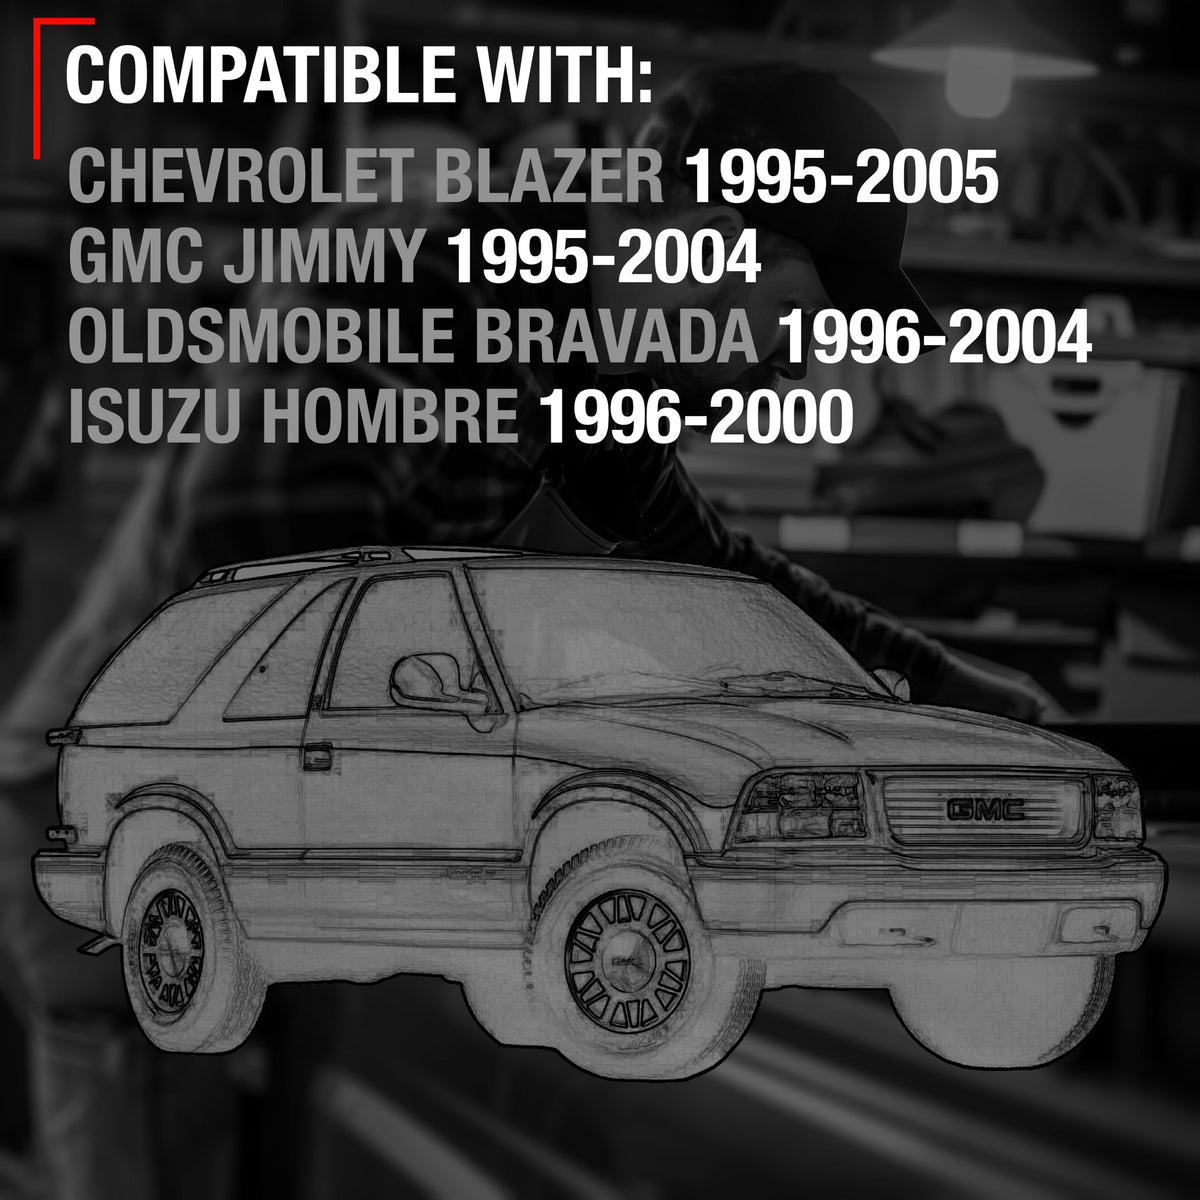 TRUBUILT1 AUTOMOTIVE Exterior Door Handle, Front Left Driver Side - Compatible with 1995-2005 Chevrolet Blazer; GMC Jimmy; Oldsmobile Bravada; Isuzu Hombre - Textured Black - OEM 15058575